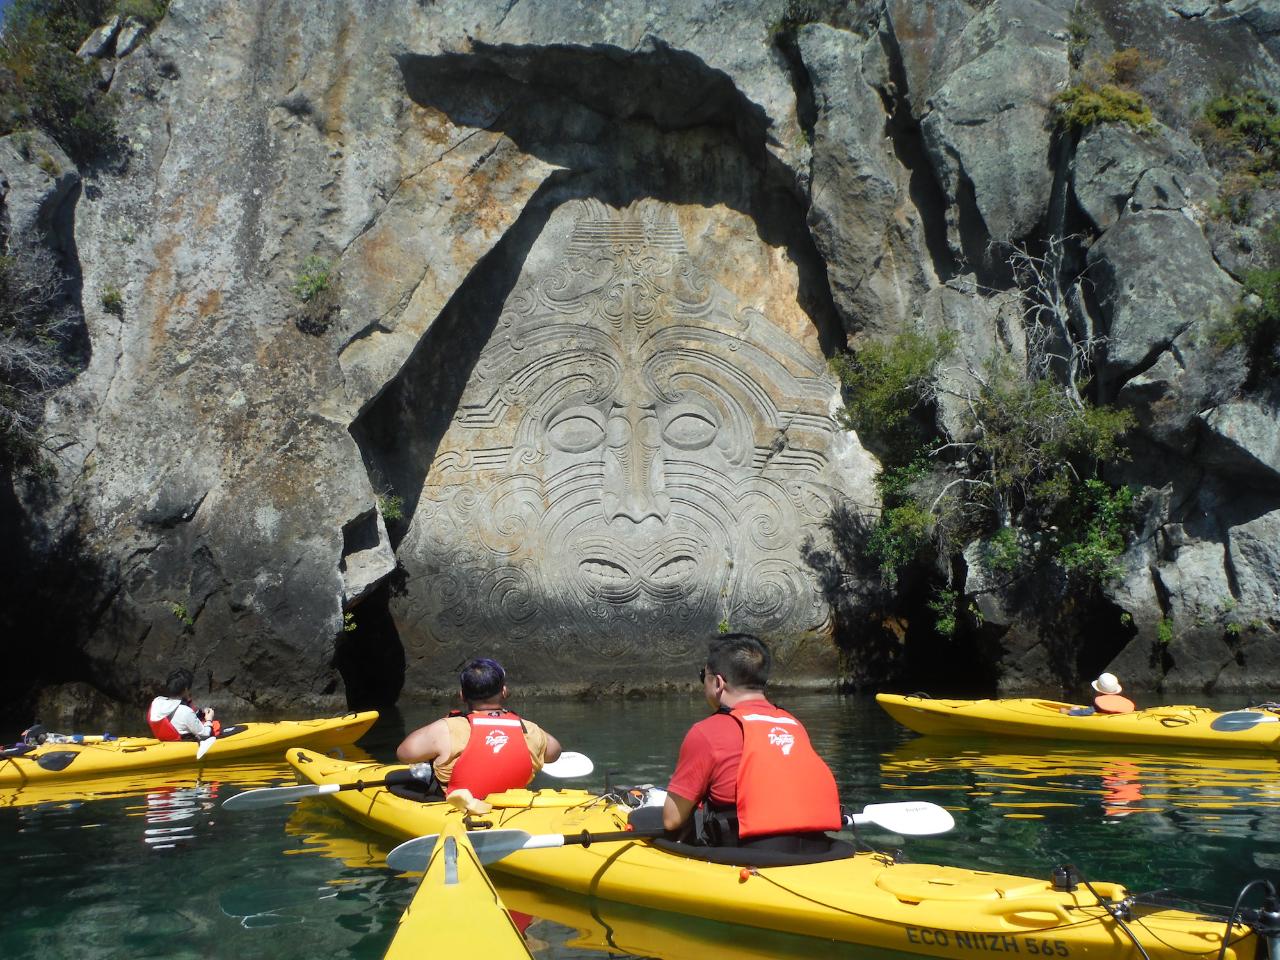 SPECIAL $400 - Group of 4 - Half Day Kayaking - Maori Rock Carvings Adventure